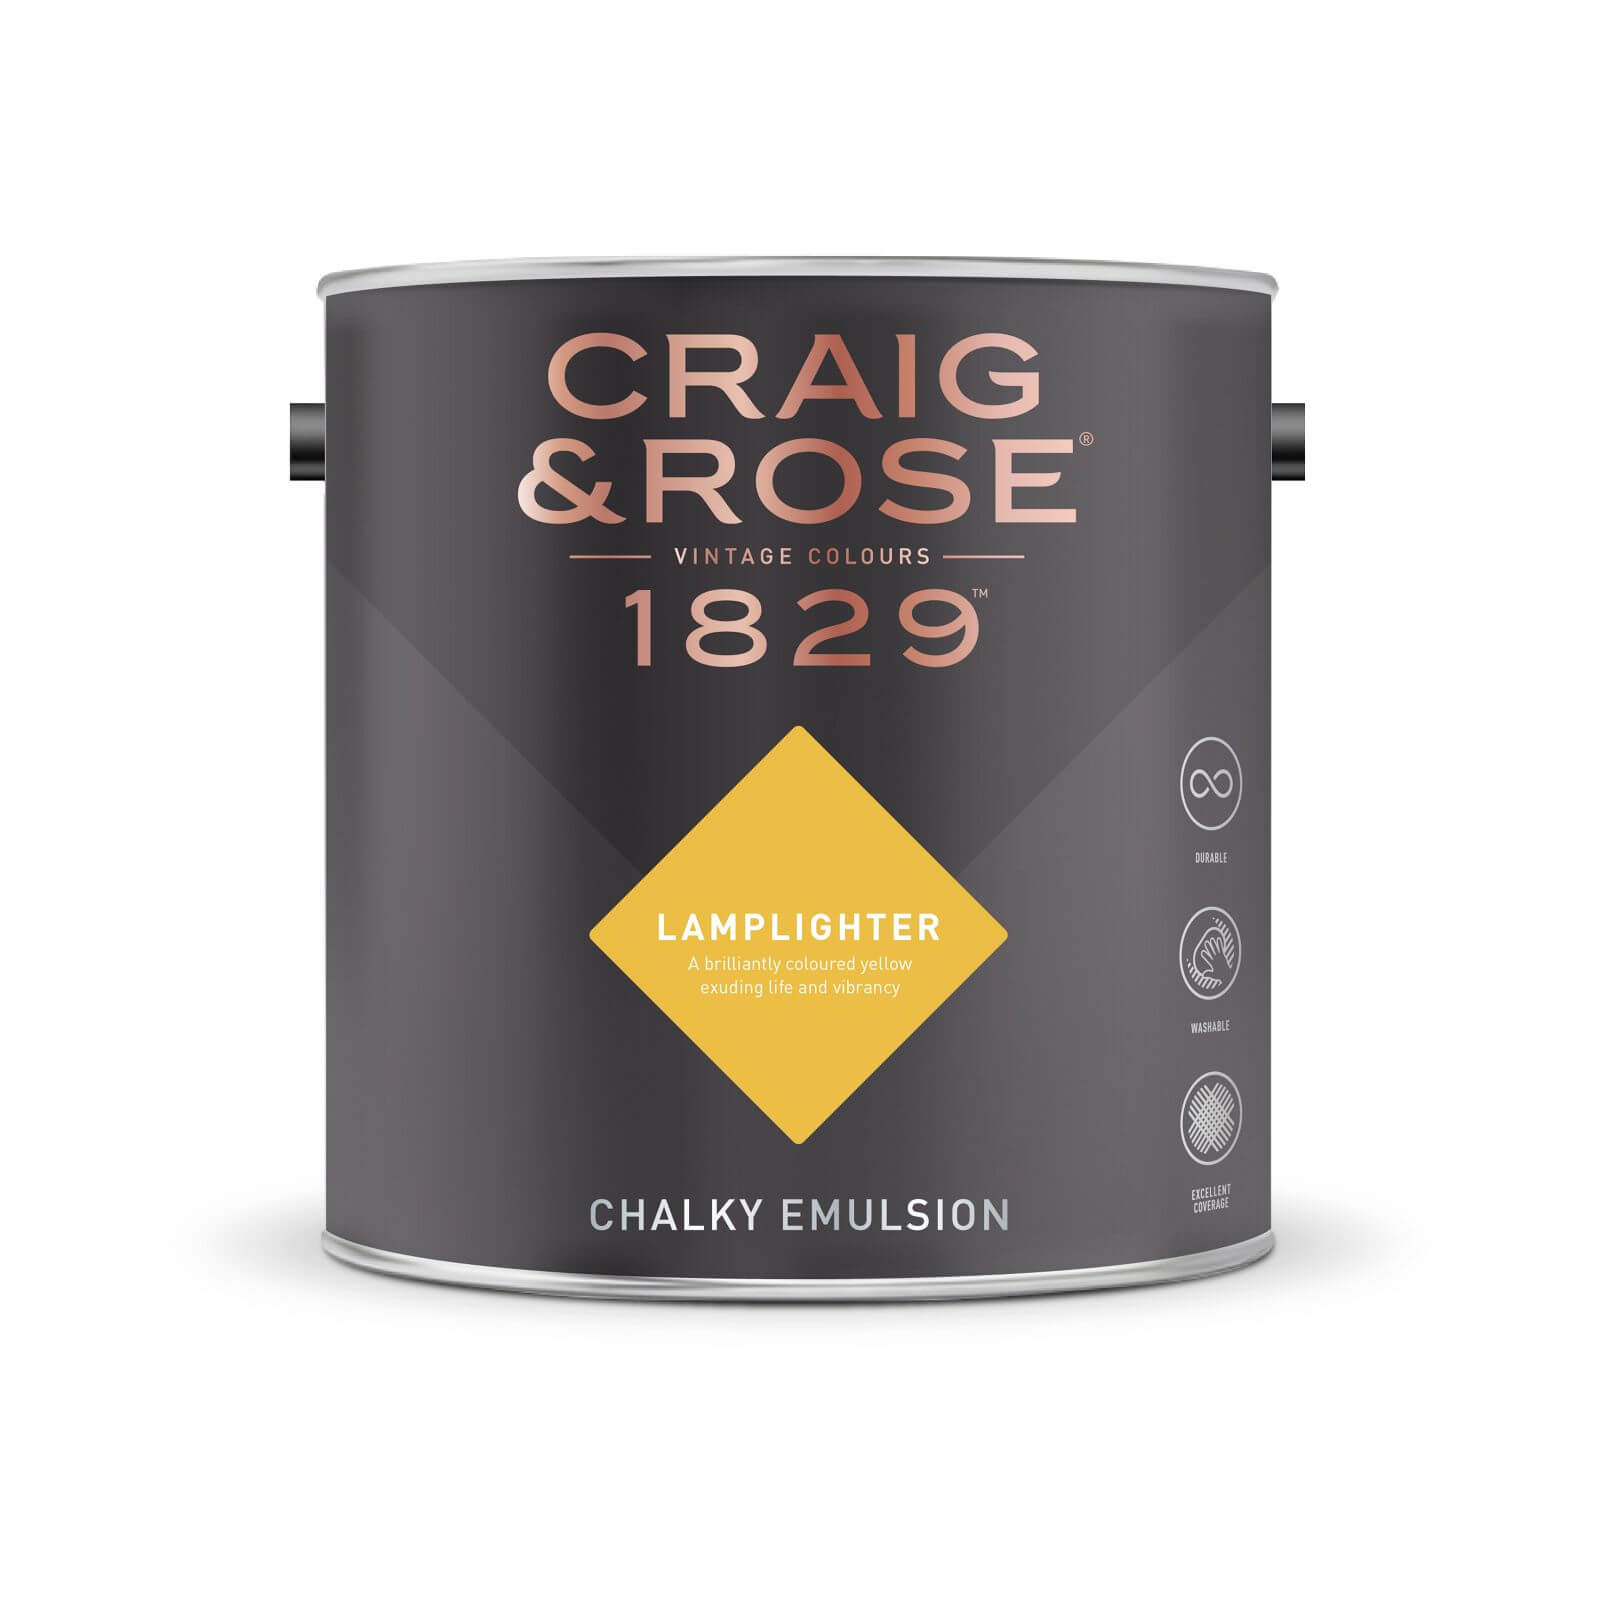 Craig & Rose 1829 Chalky Emulsion Paint Lamplighter - 5L